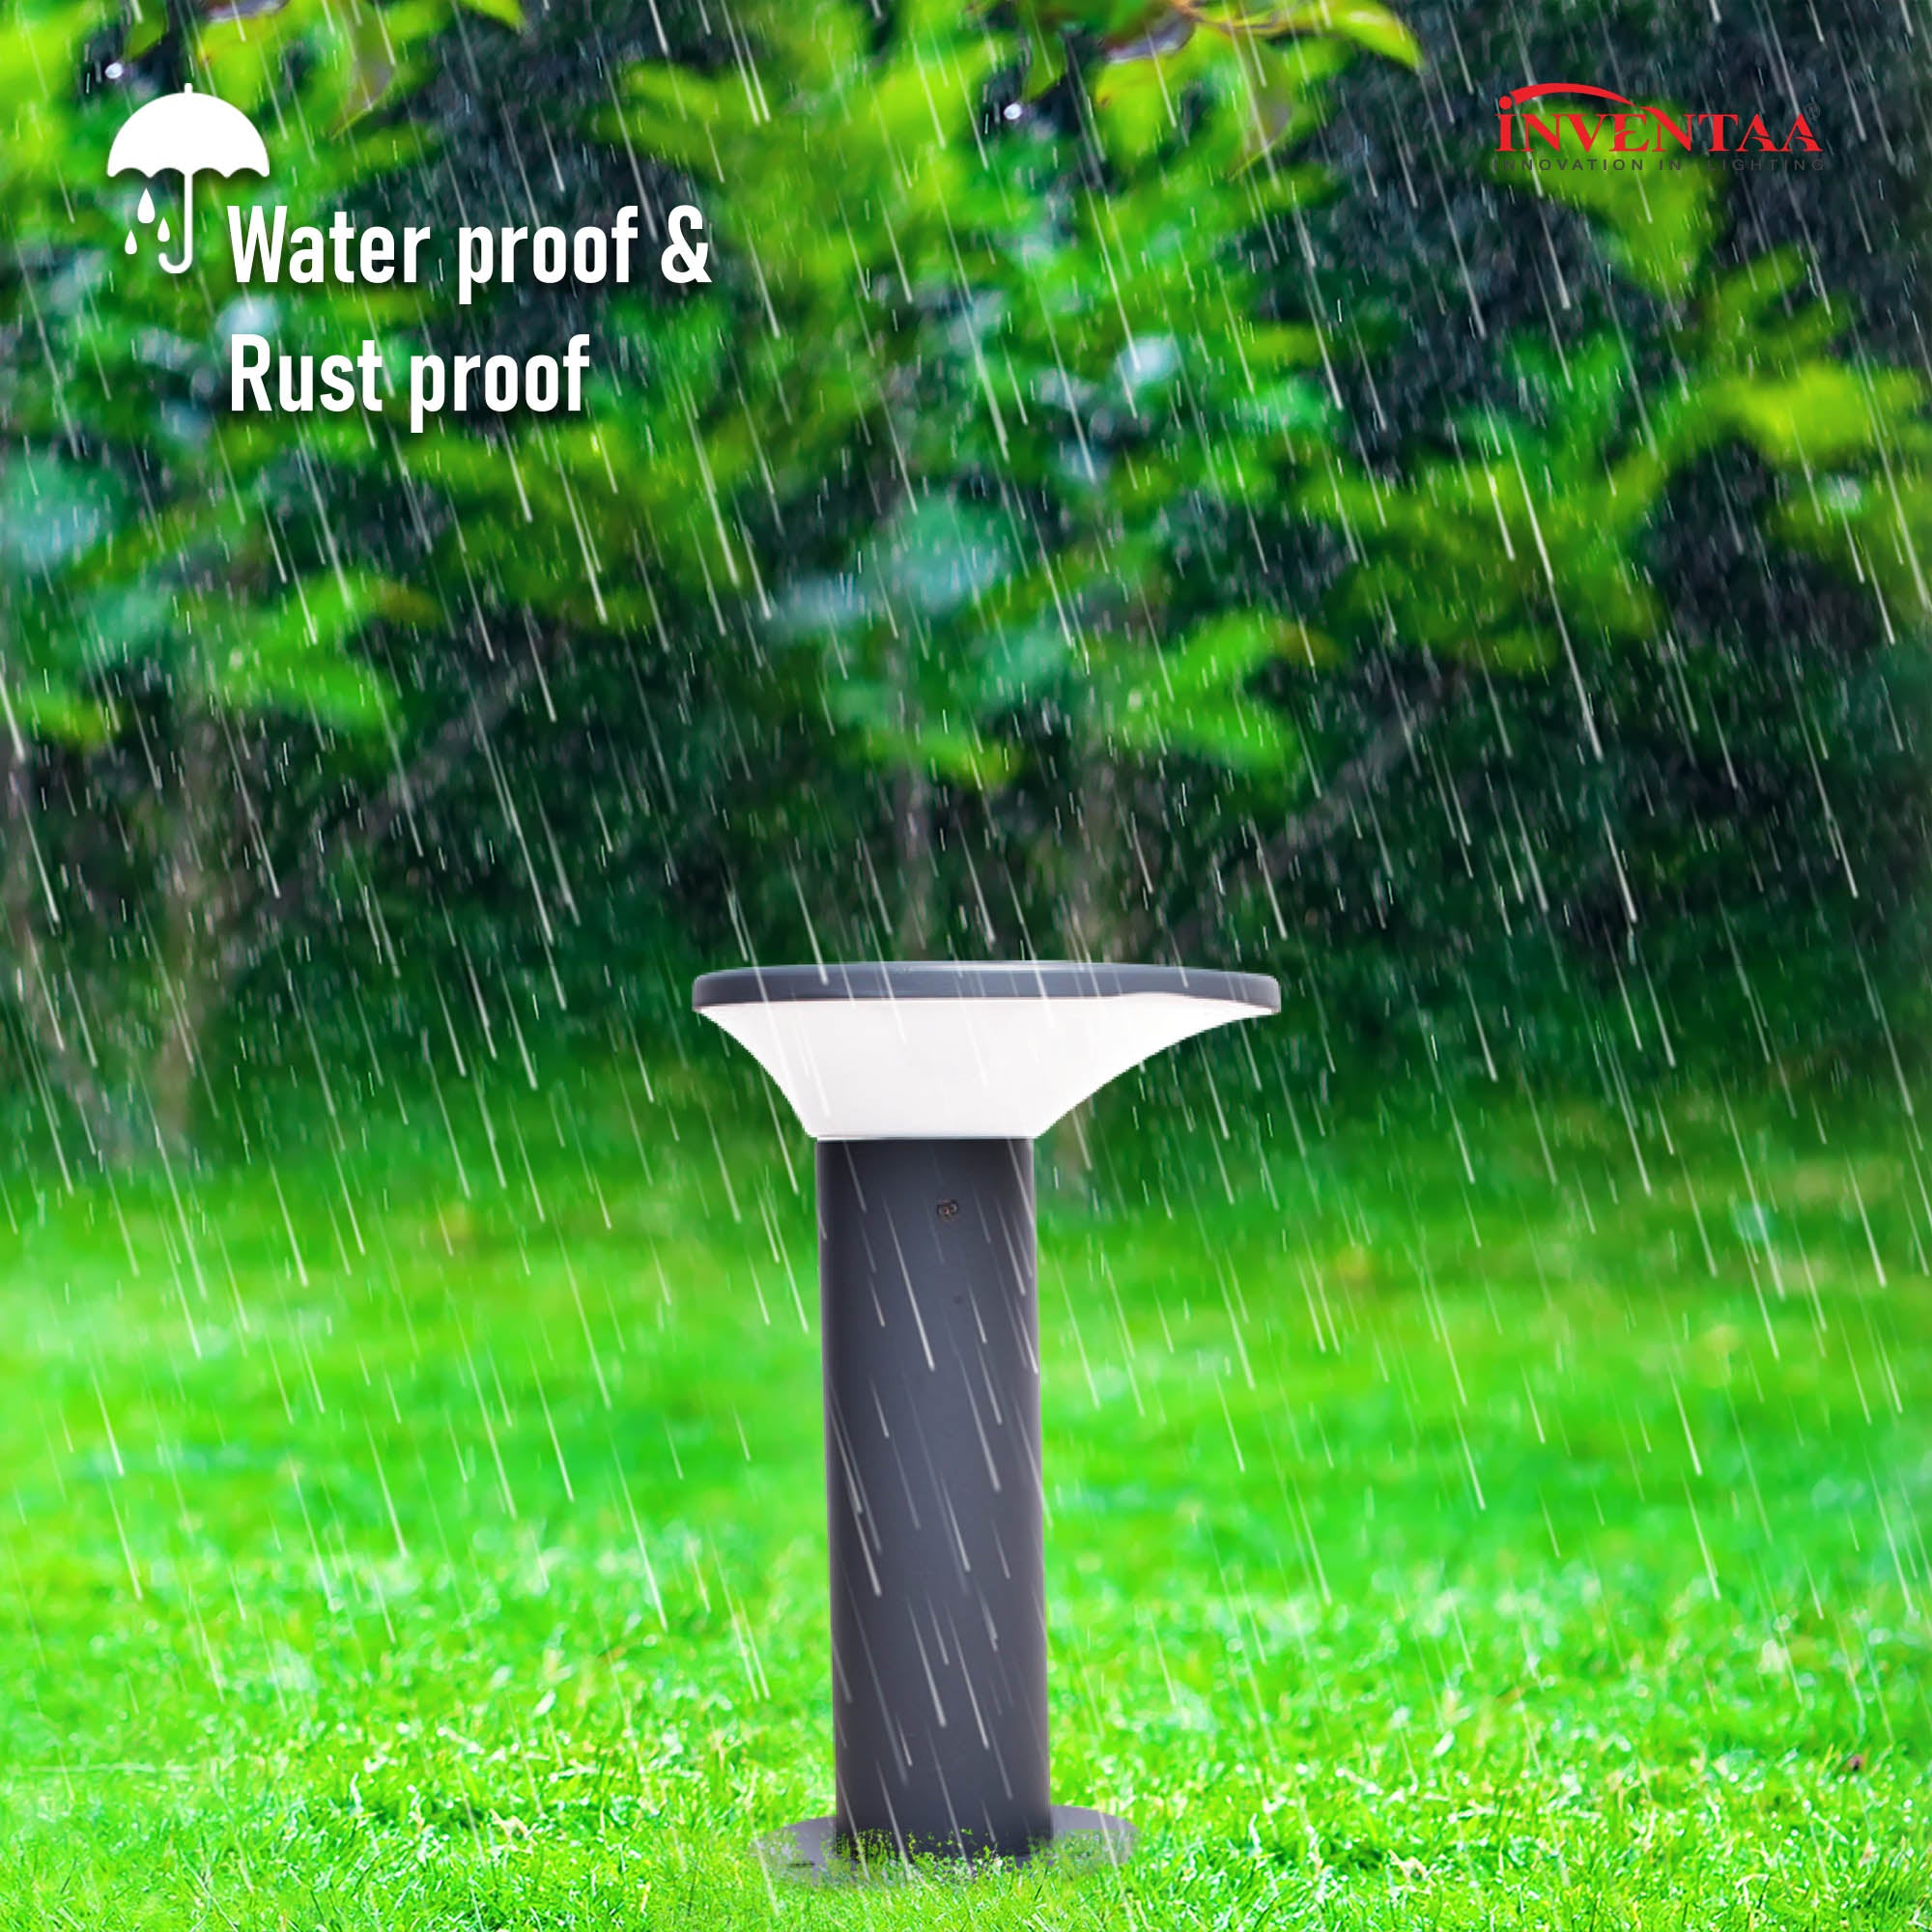 Romy 1 feet led garden bollard light featuring itsrustproof and waterproof resistance for outdoor use #size_1 feet